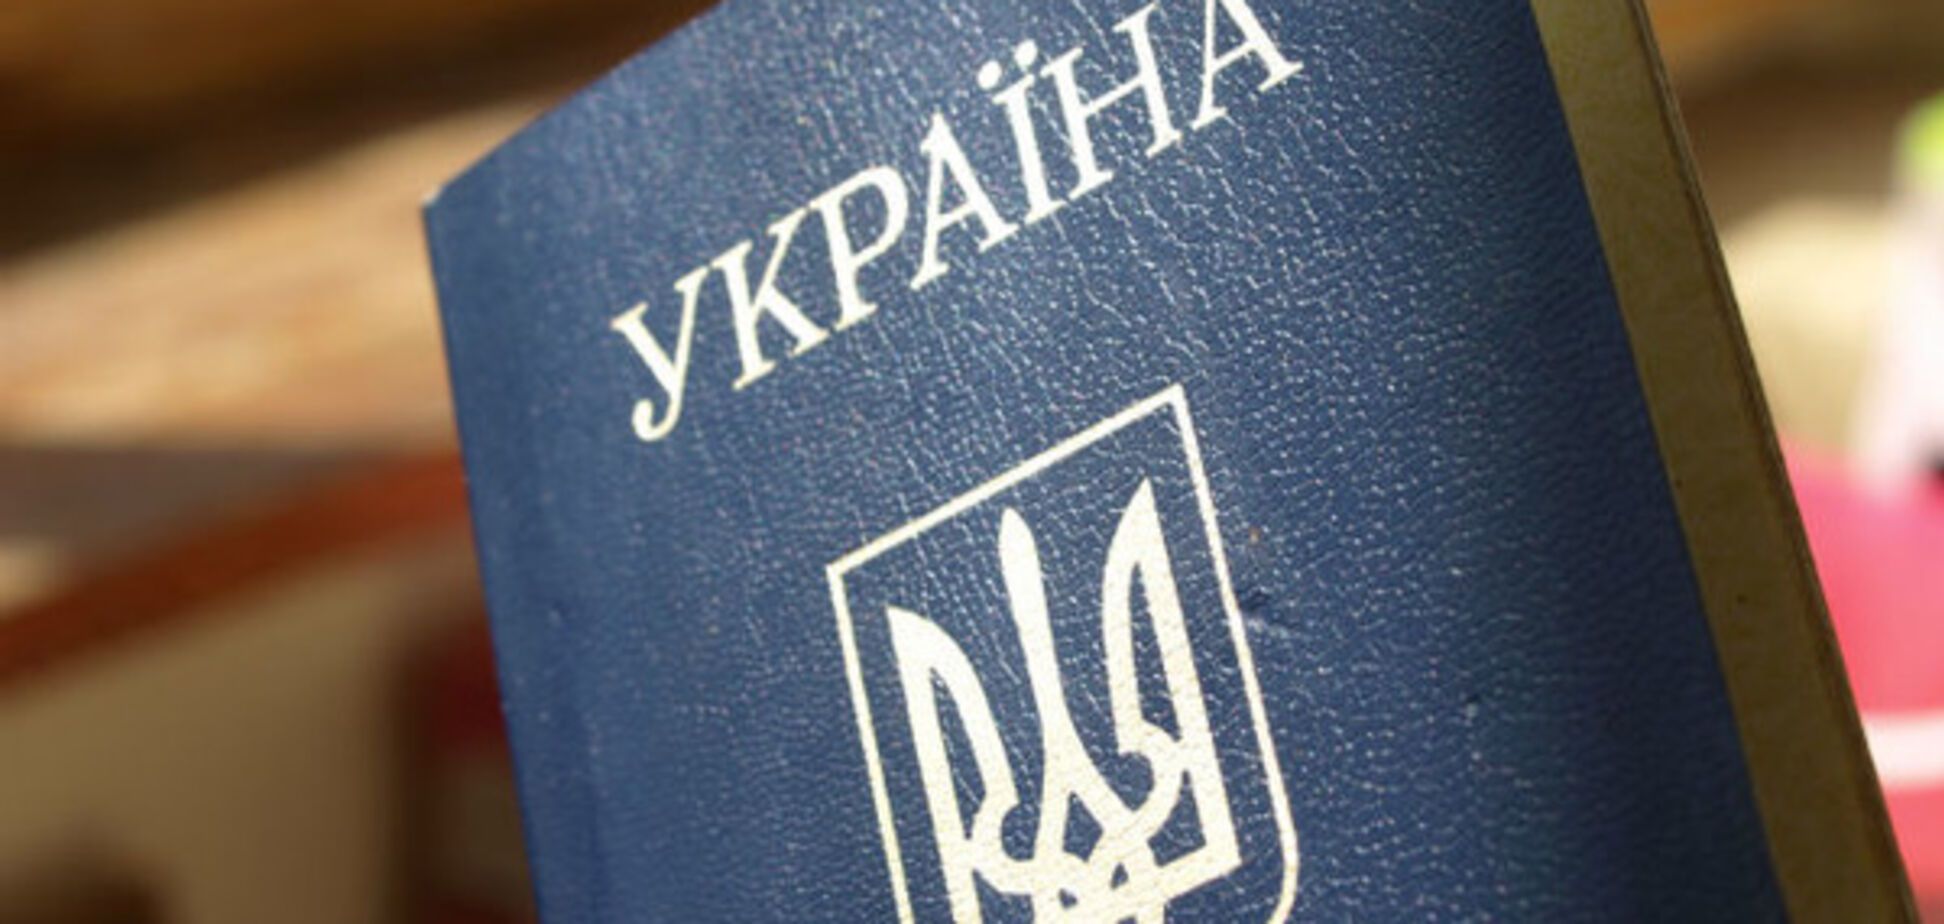 паспорт України